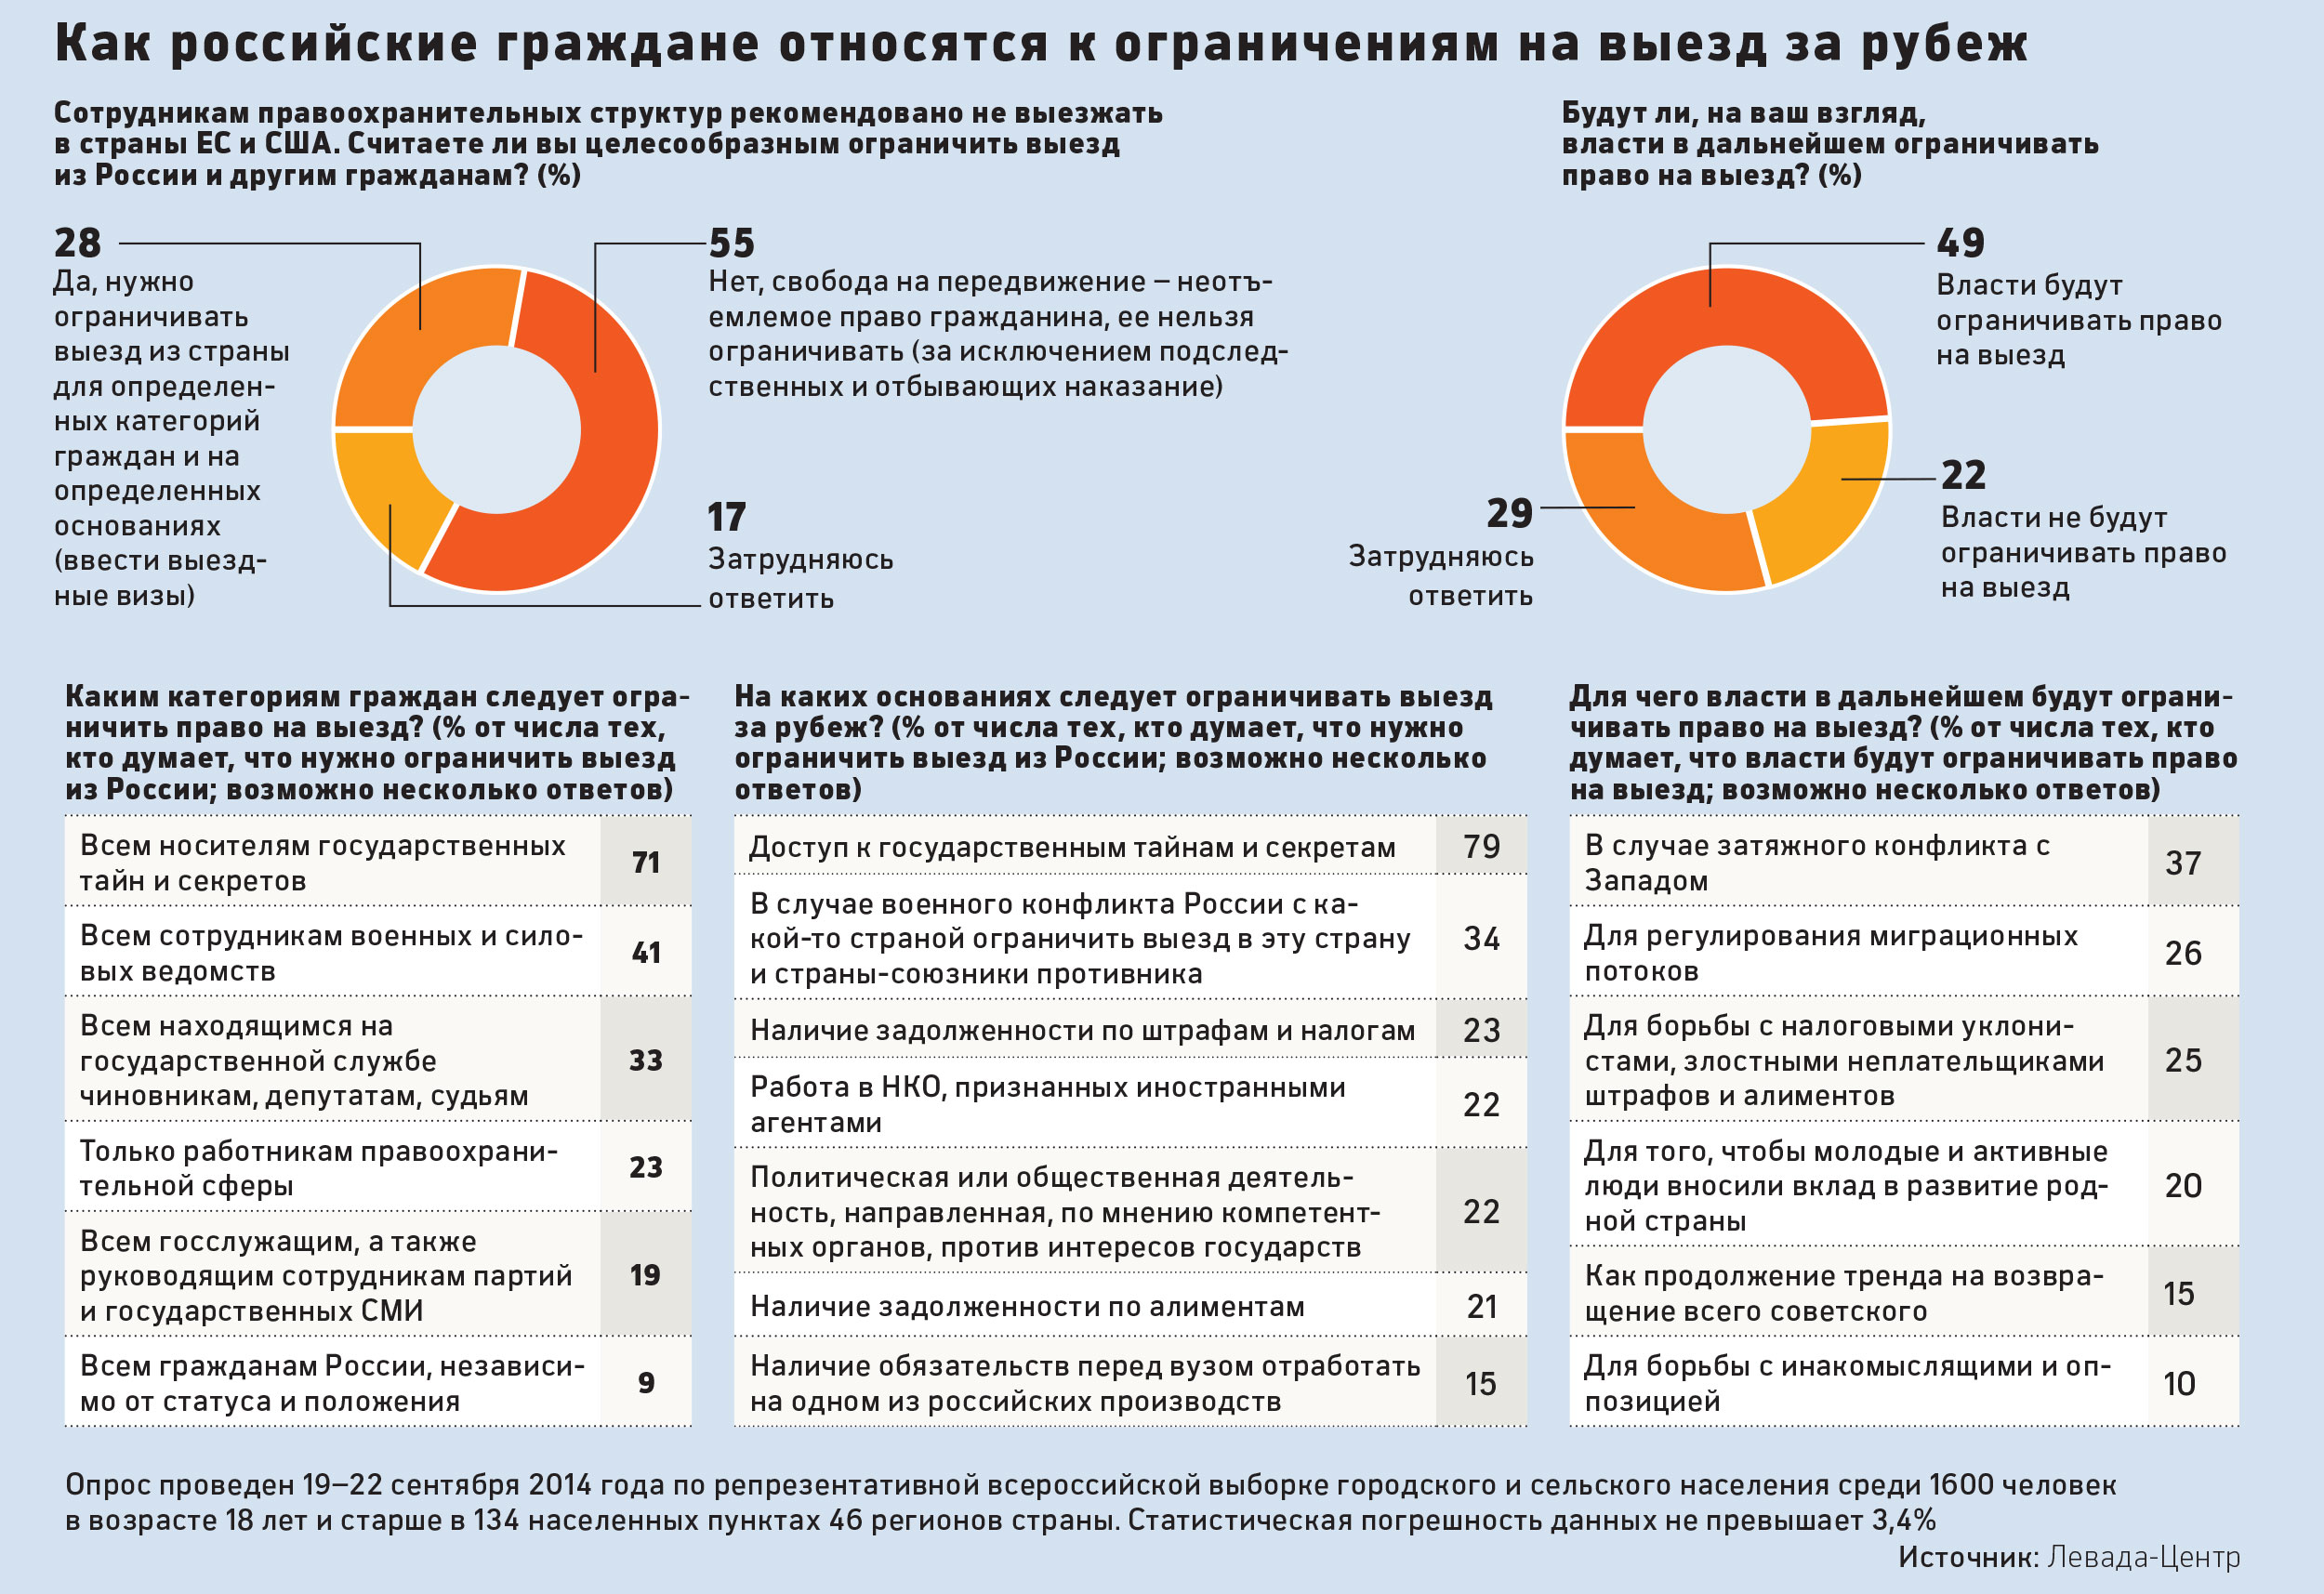 Половина россиян ждут от властей ограничений права на выезд